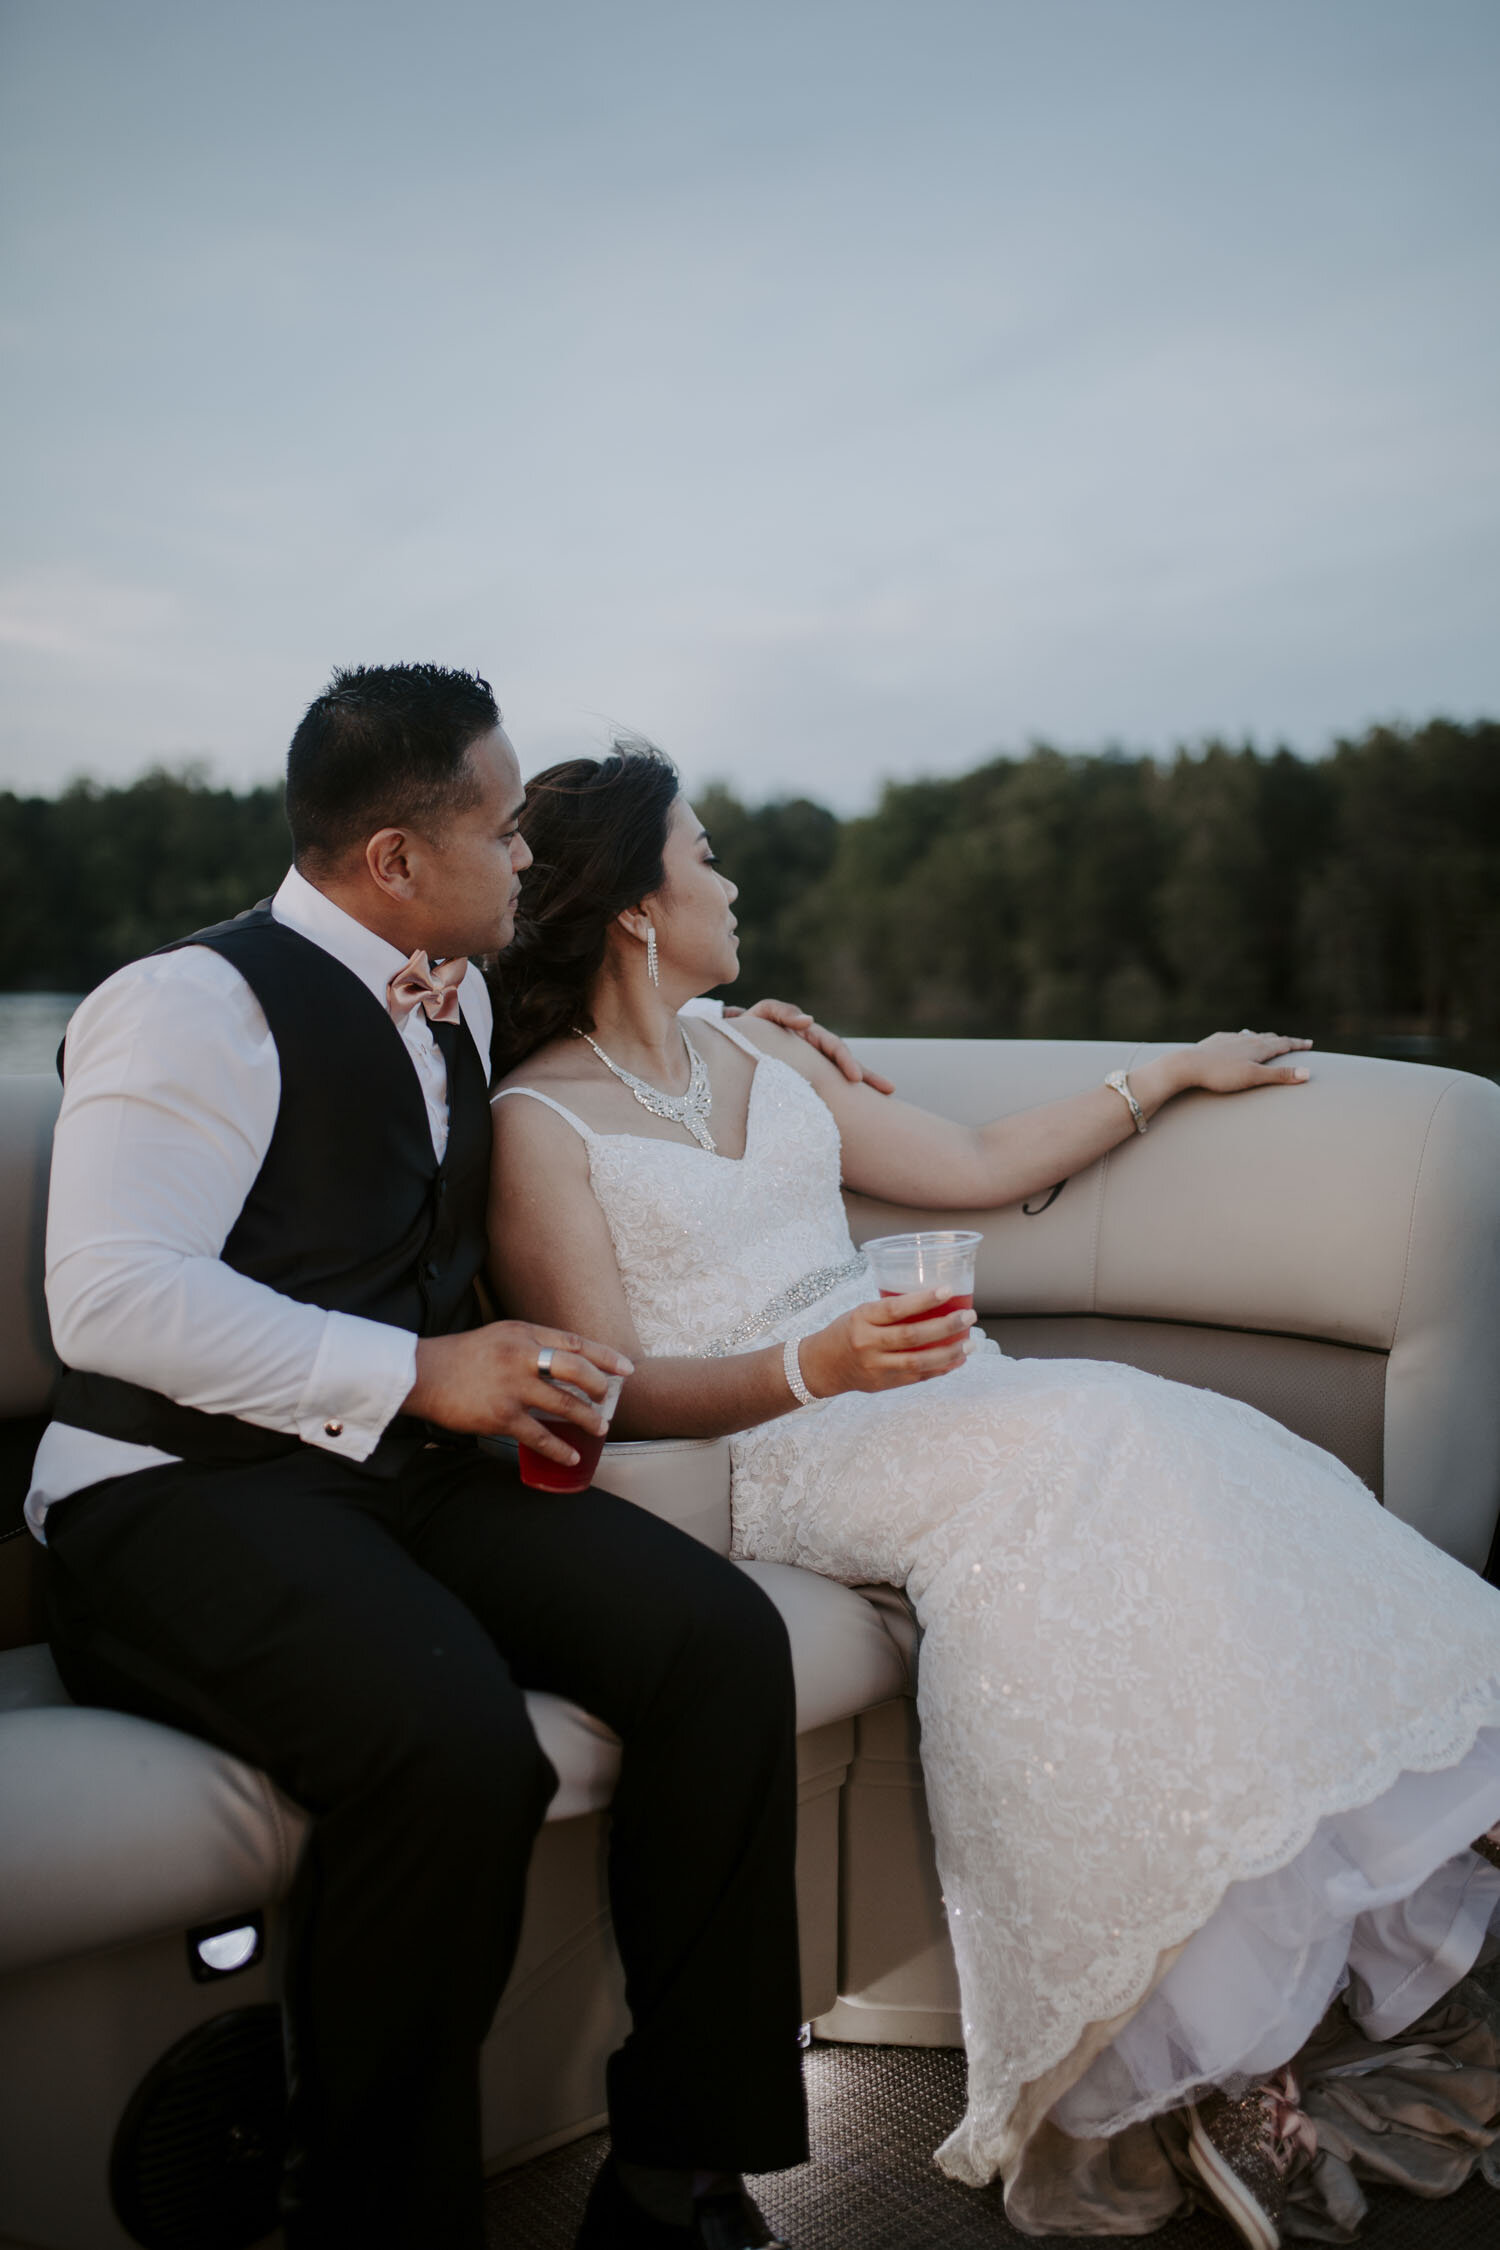 Greensboro Winston-Salem, NC Wedding Photography at Belews Lake | Bella Collina Mansion Boat Exit | Kayli LaFon Wedding Photographer